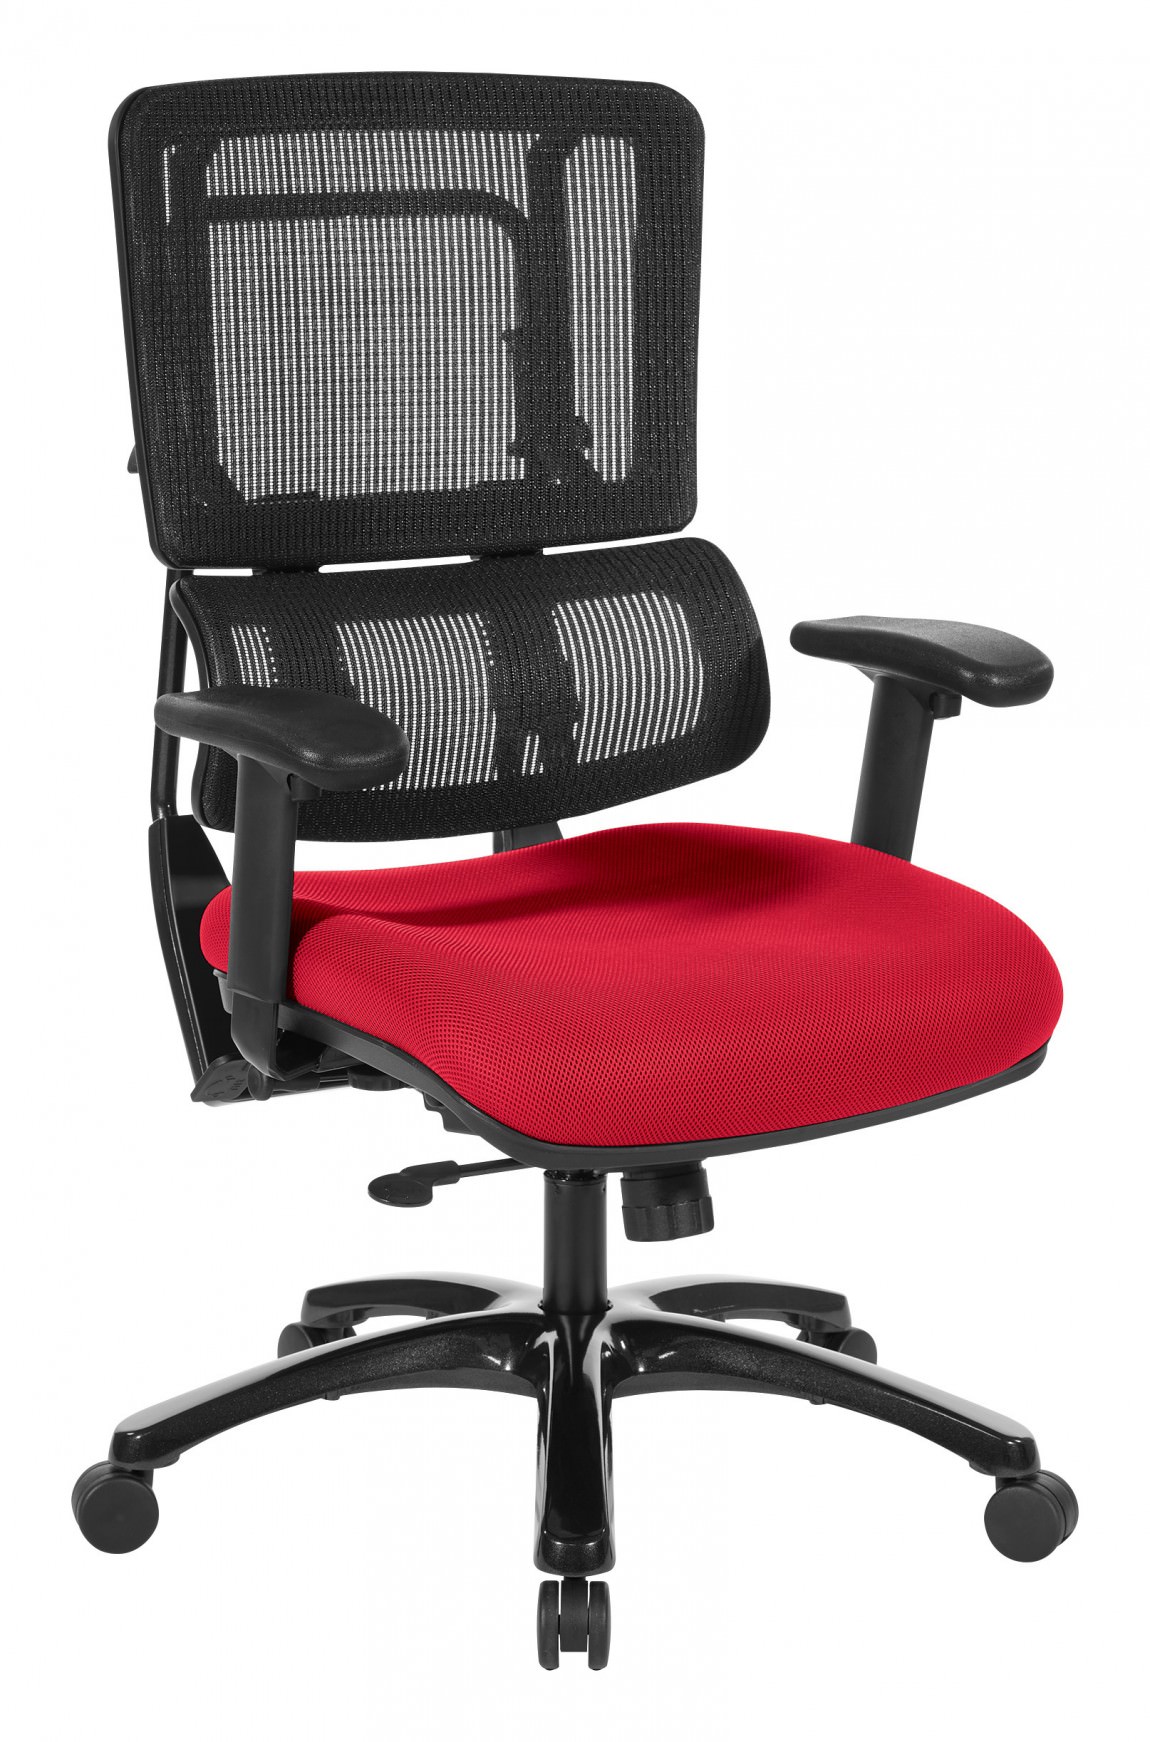 Mesh Back Ergonomic Chair